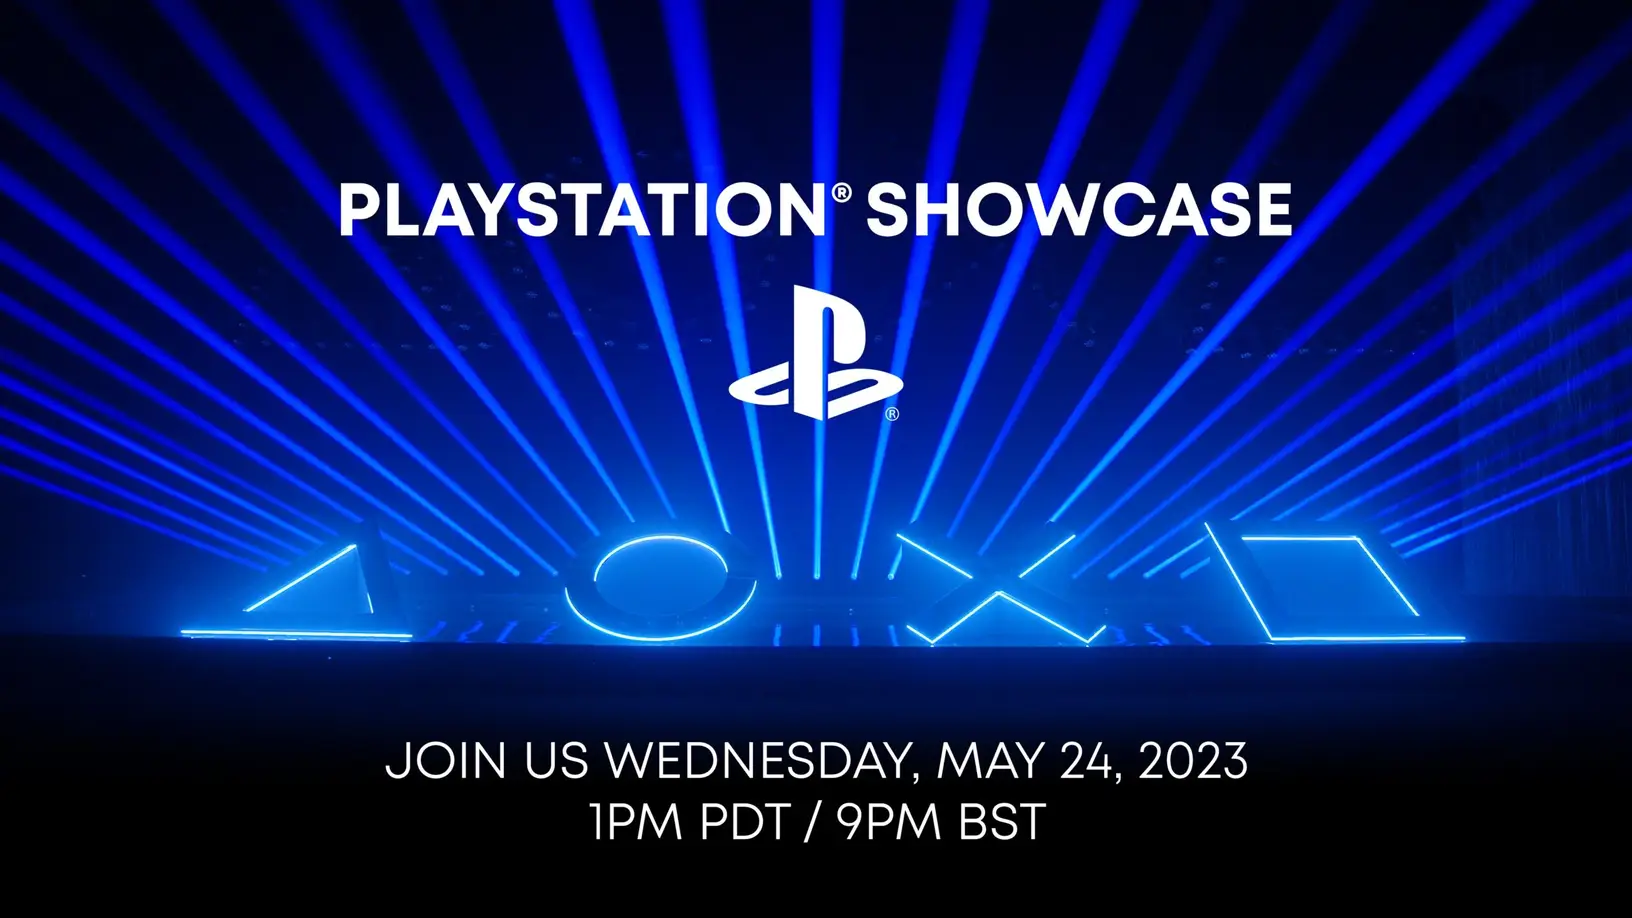 PlayStation Showcase happening next week